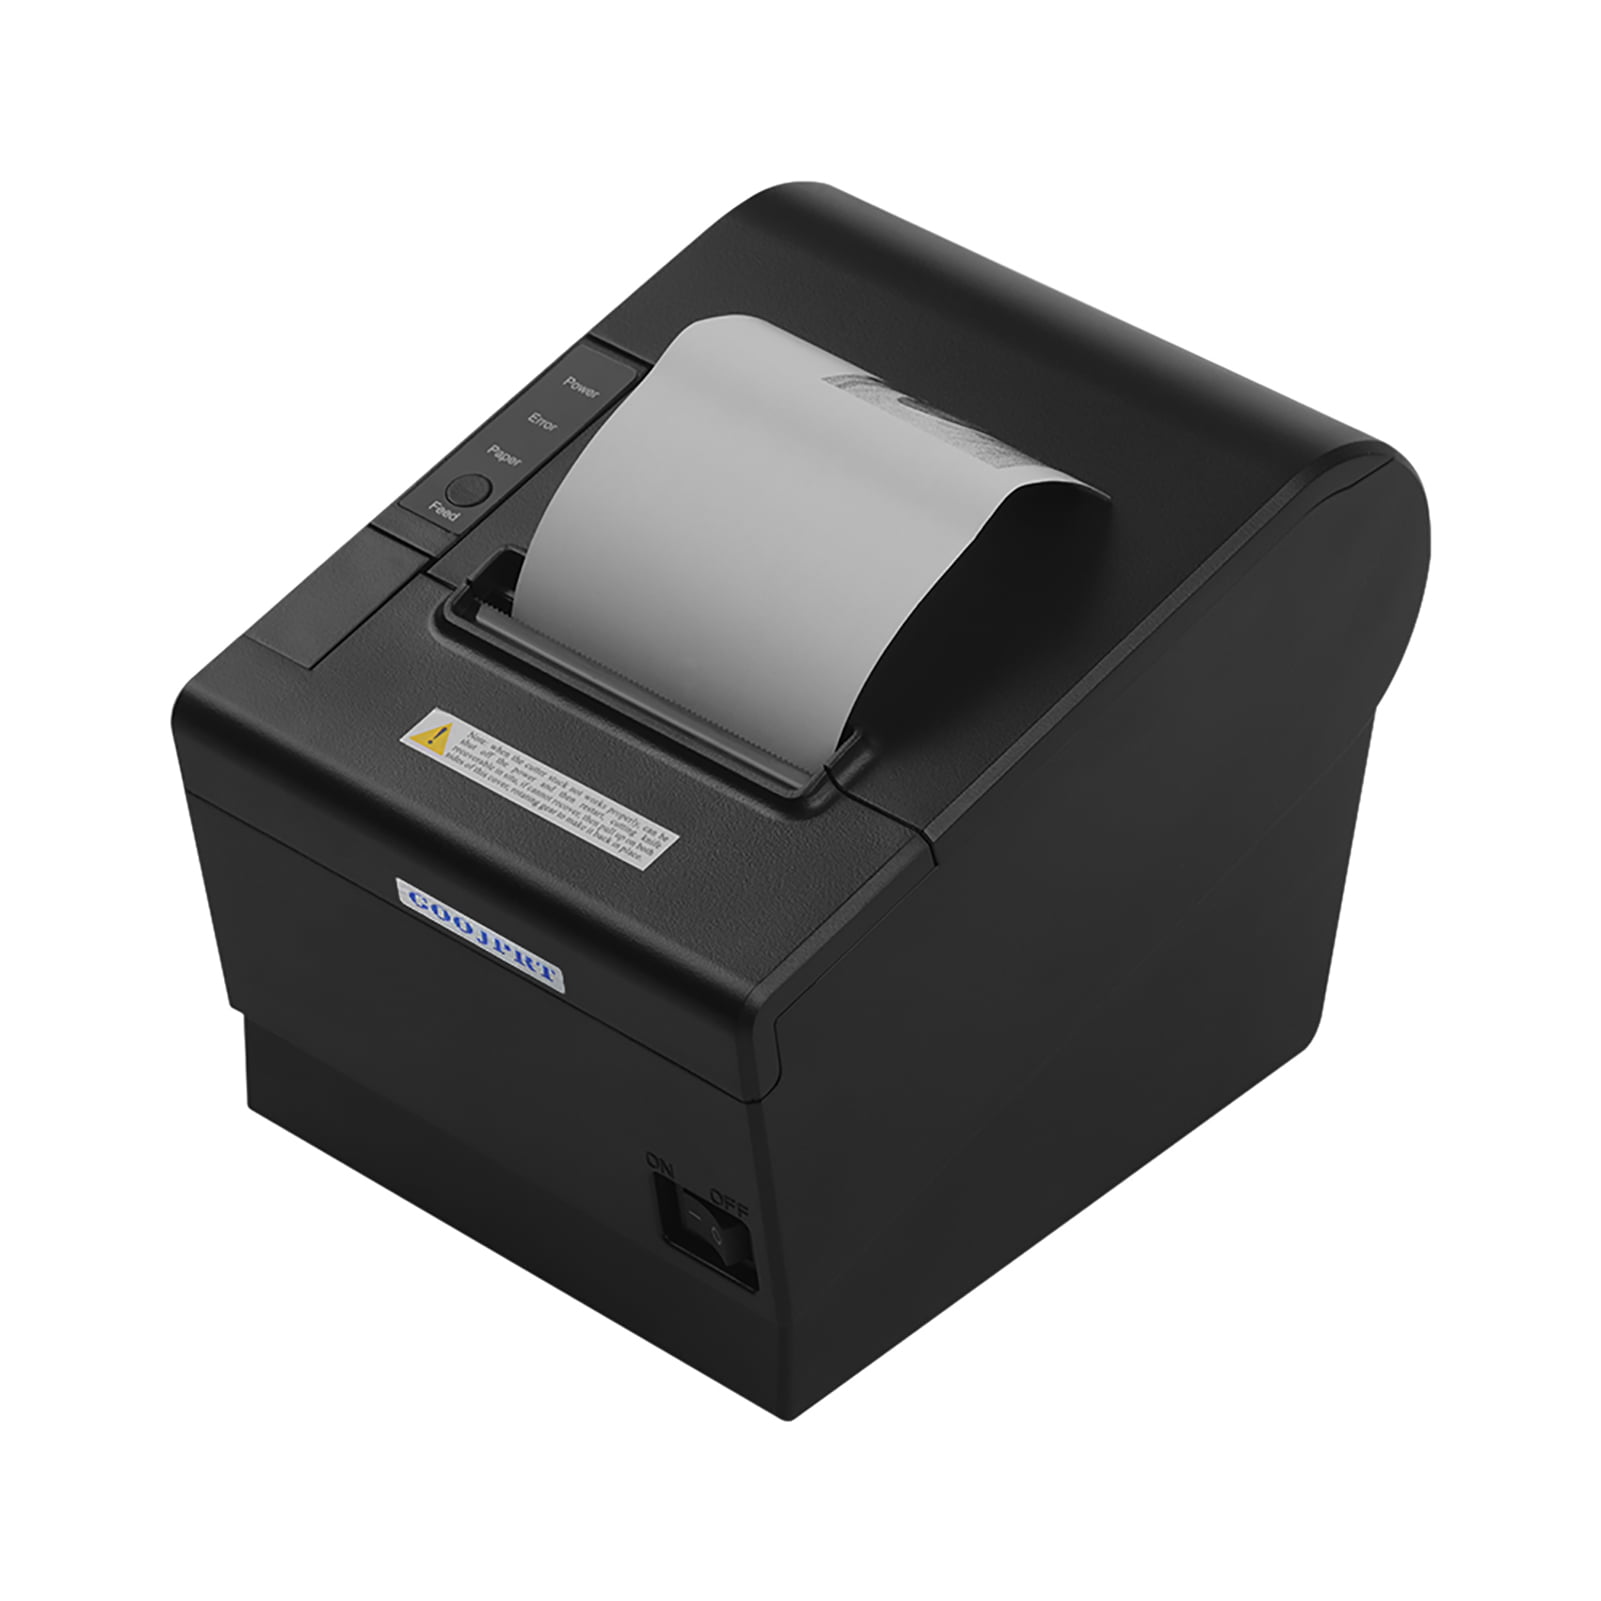 Details about   Key Register Cash Box Drawer For Epson POS Receipt Printers RJ11 Plug Connector 